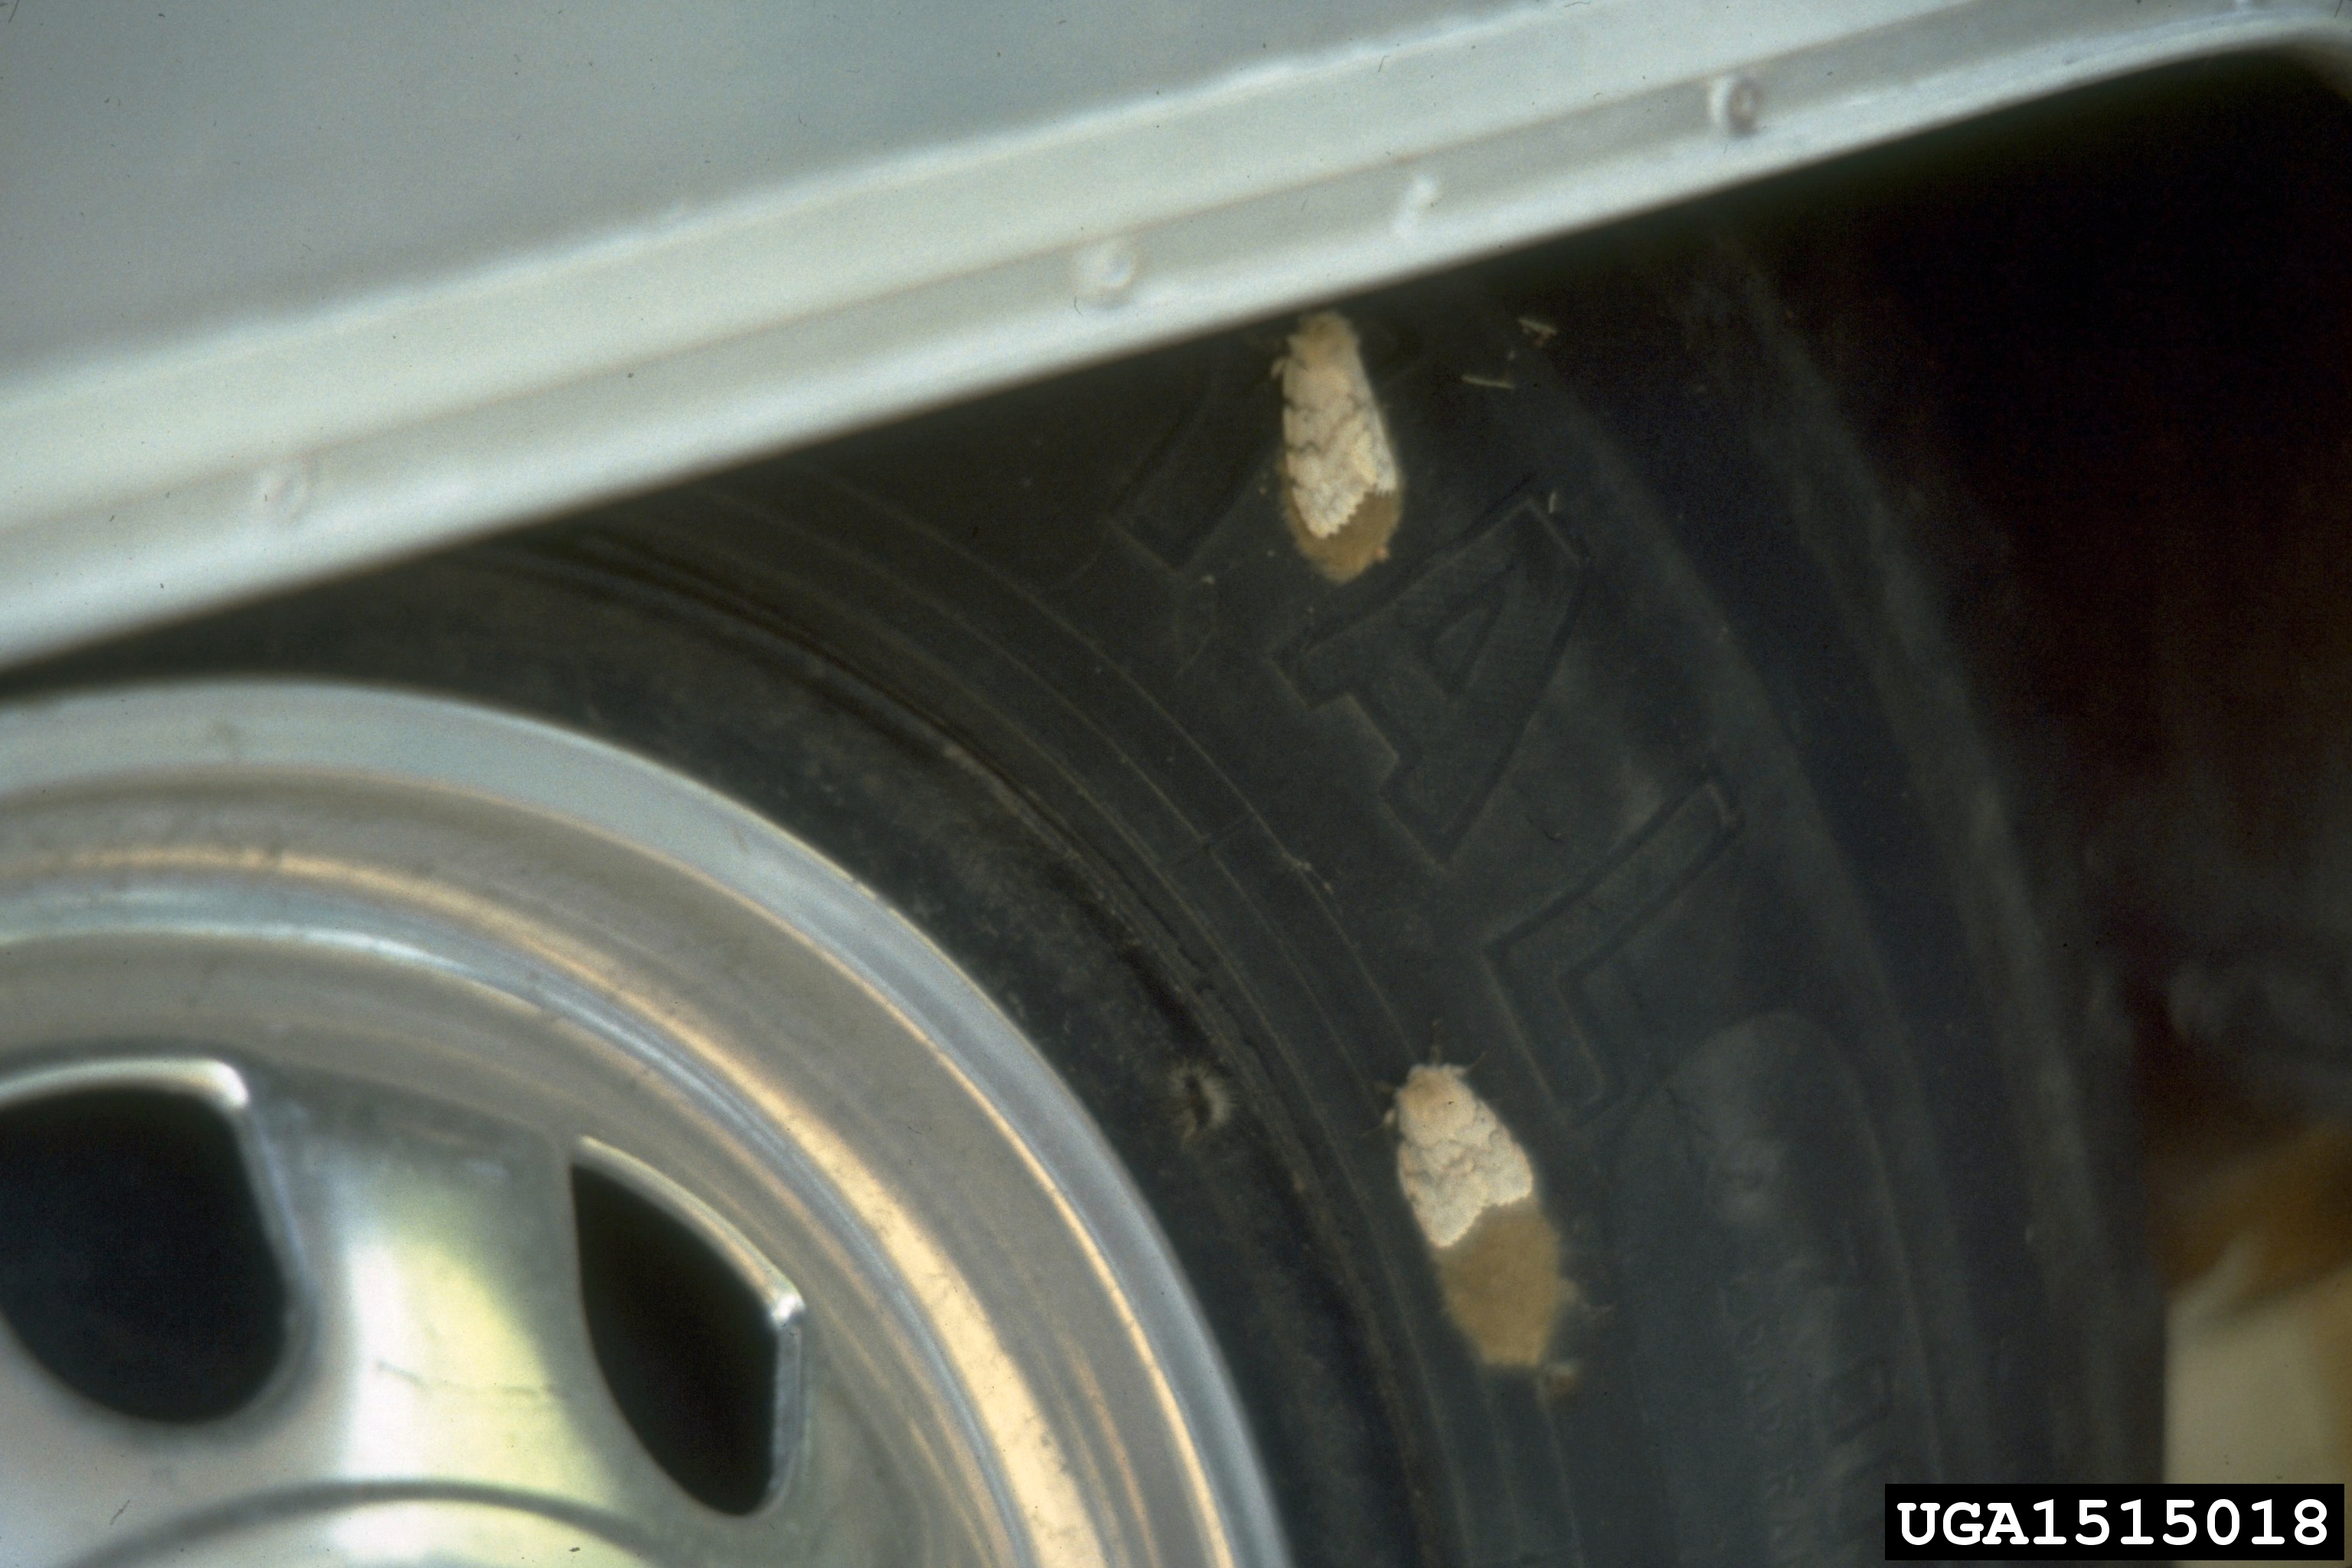 Gypsy moth egg cases on trailer wheel